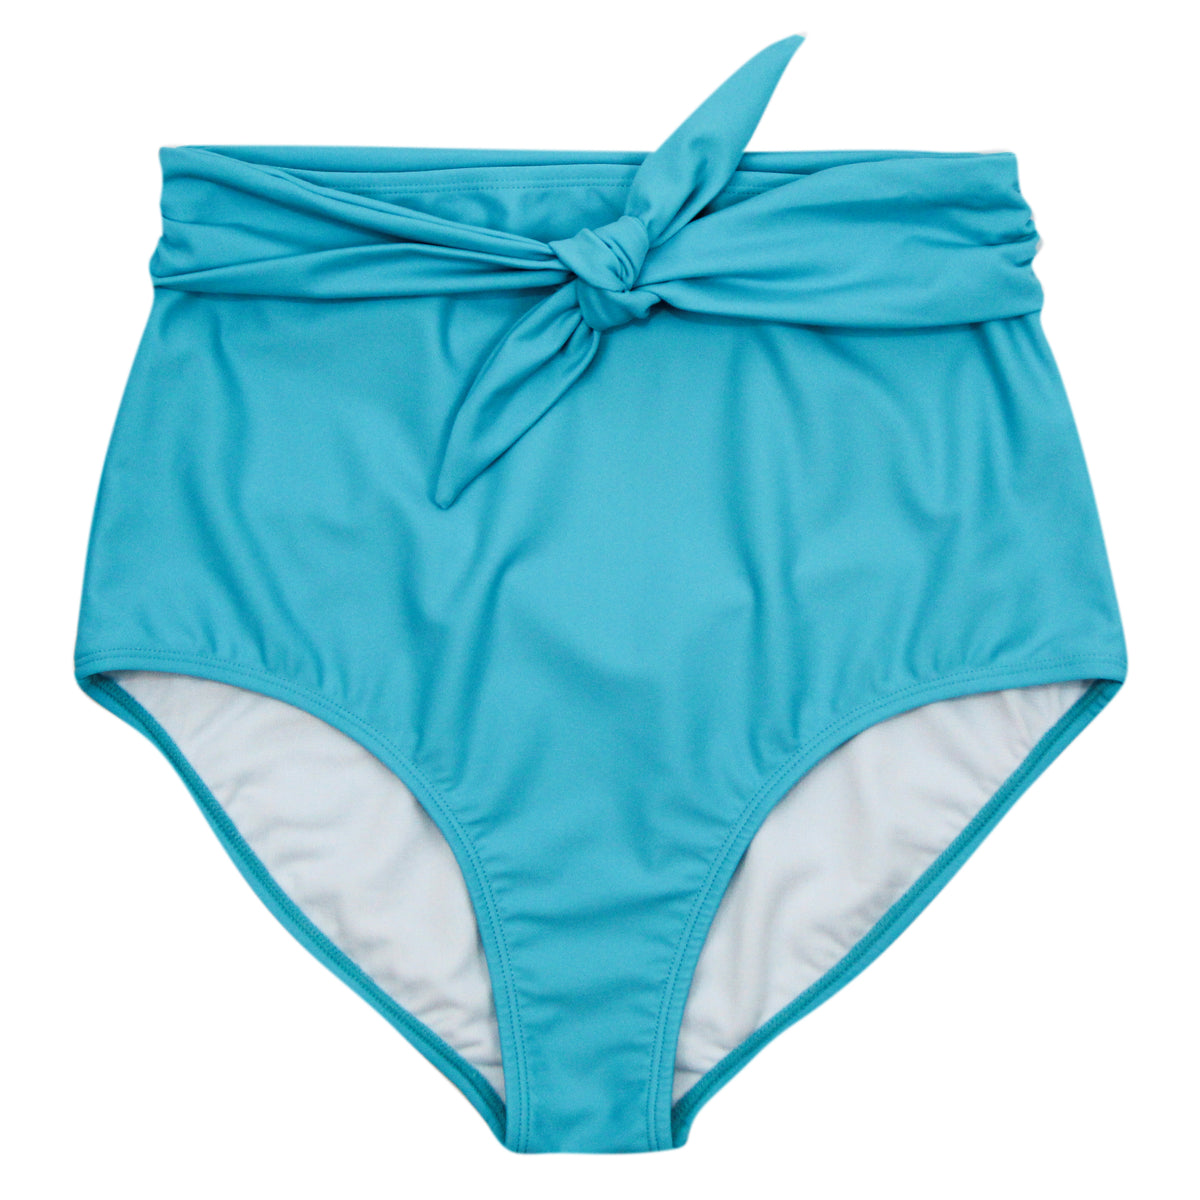 Swim Sense Teal Waters High-Waisted Bikini Bottom - Blue